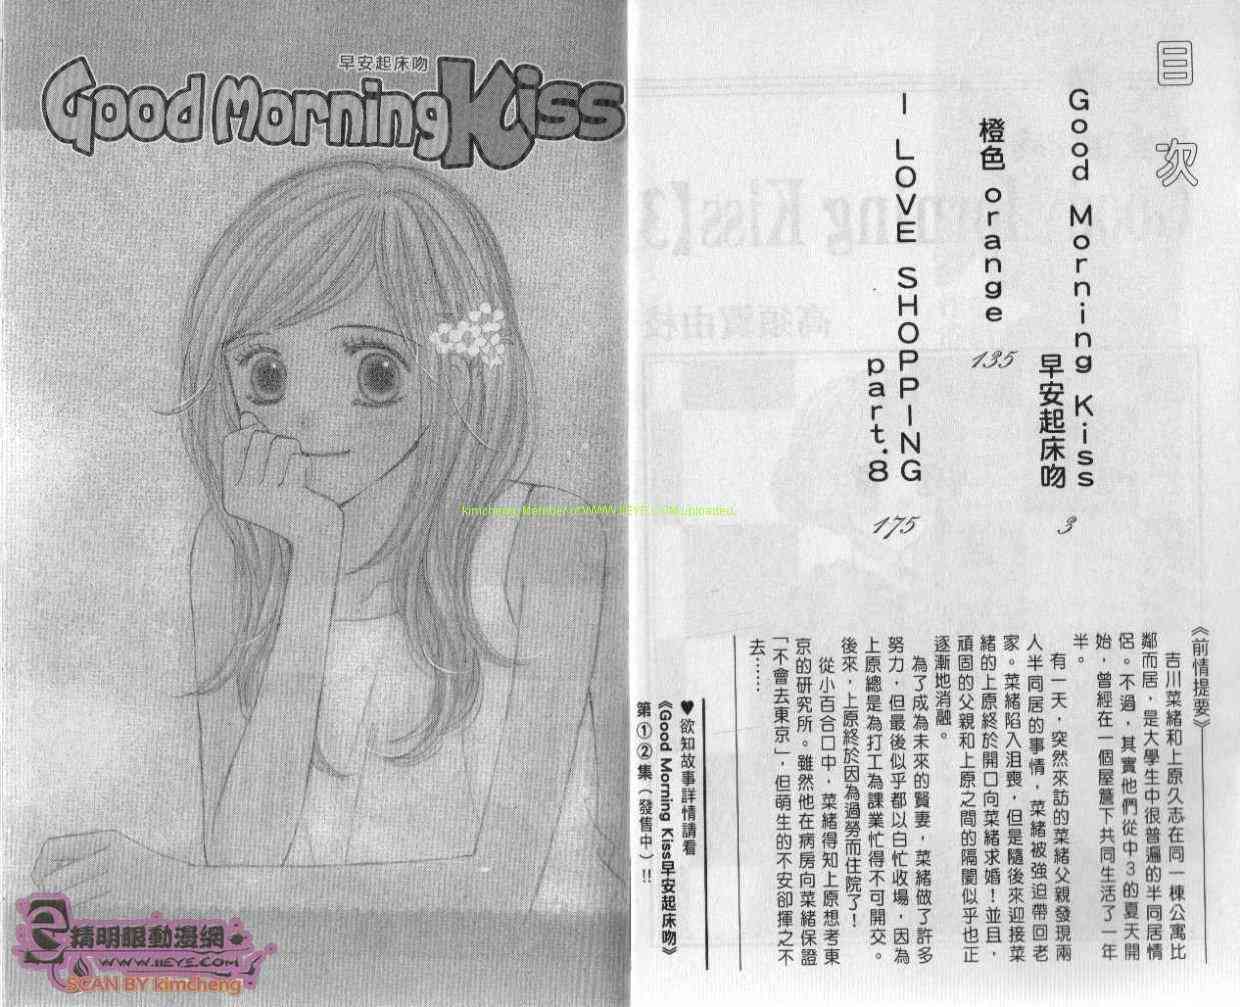 Good Morning Kiss - 3卷(1/2) - 4